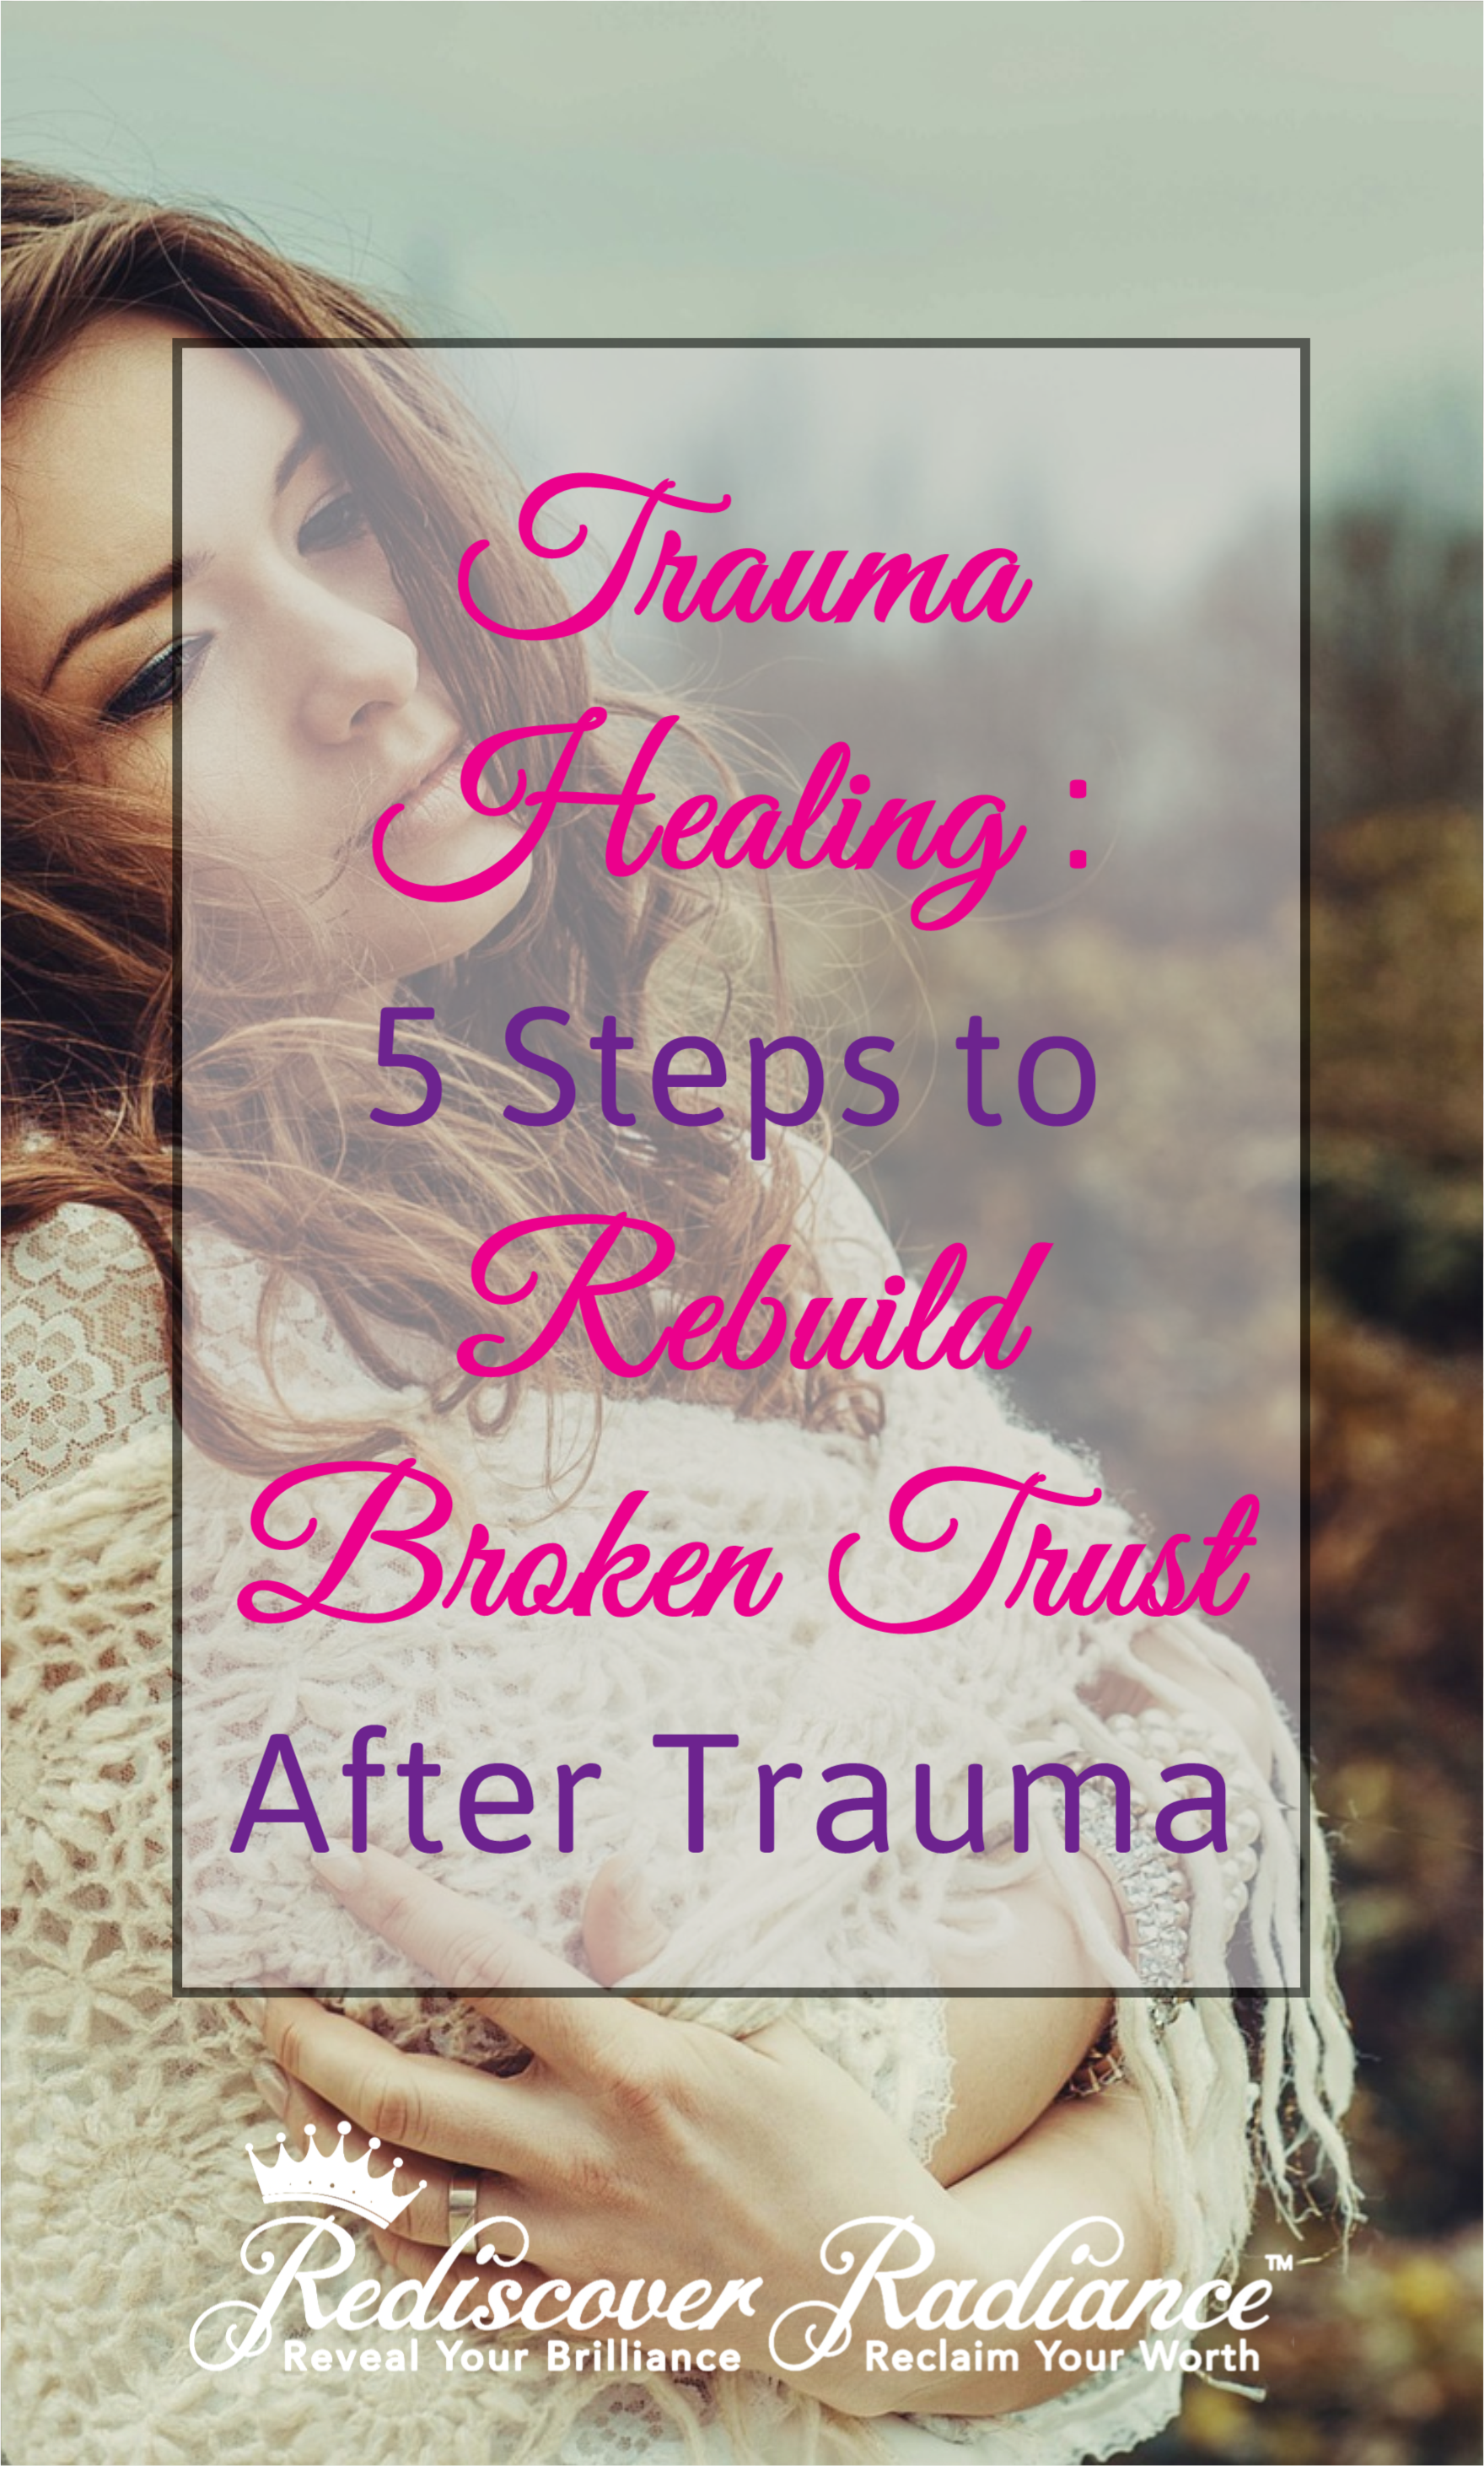 rebuild broken trust after trauma healing